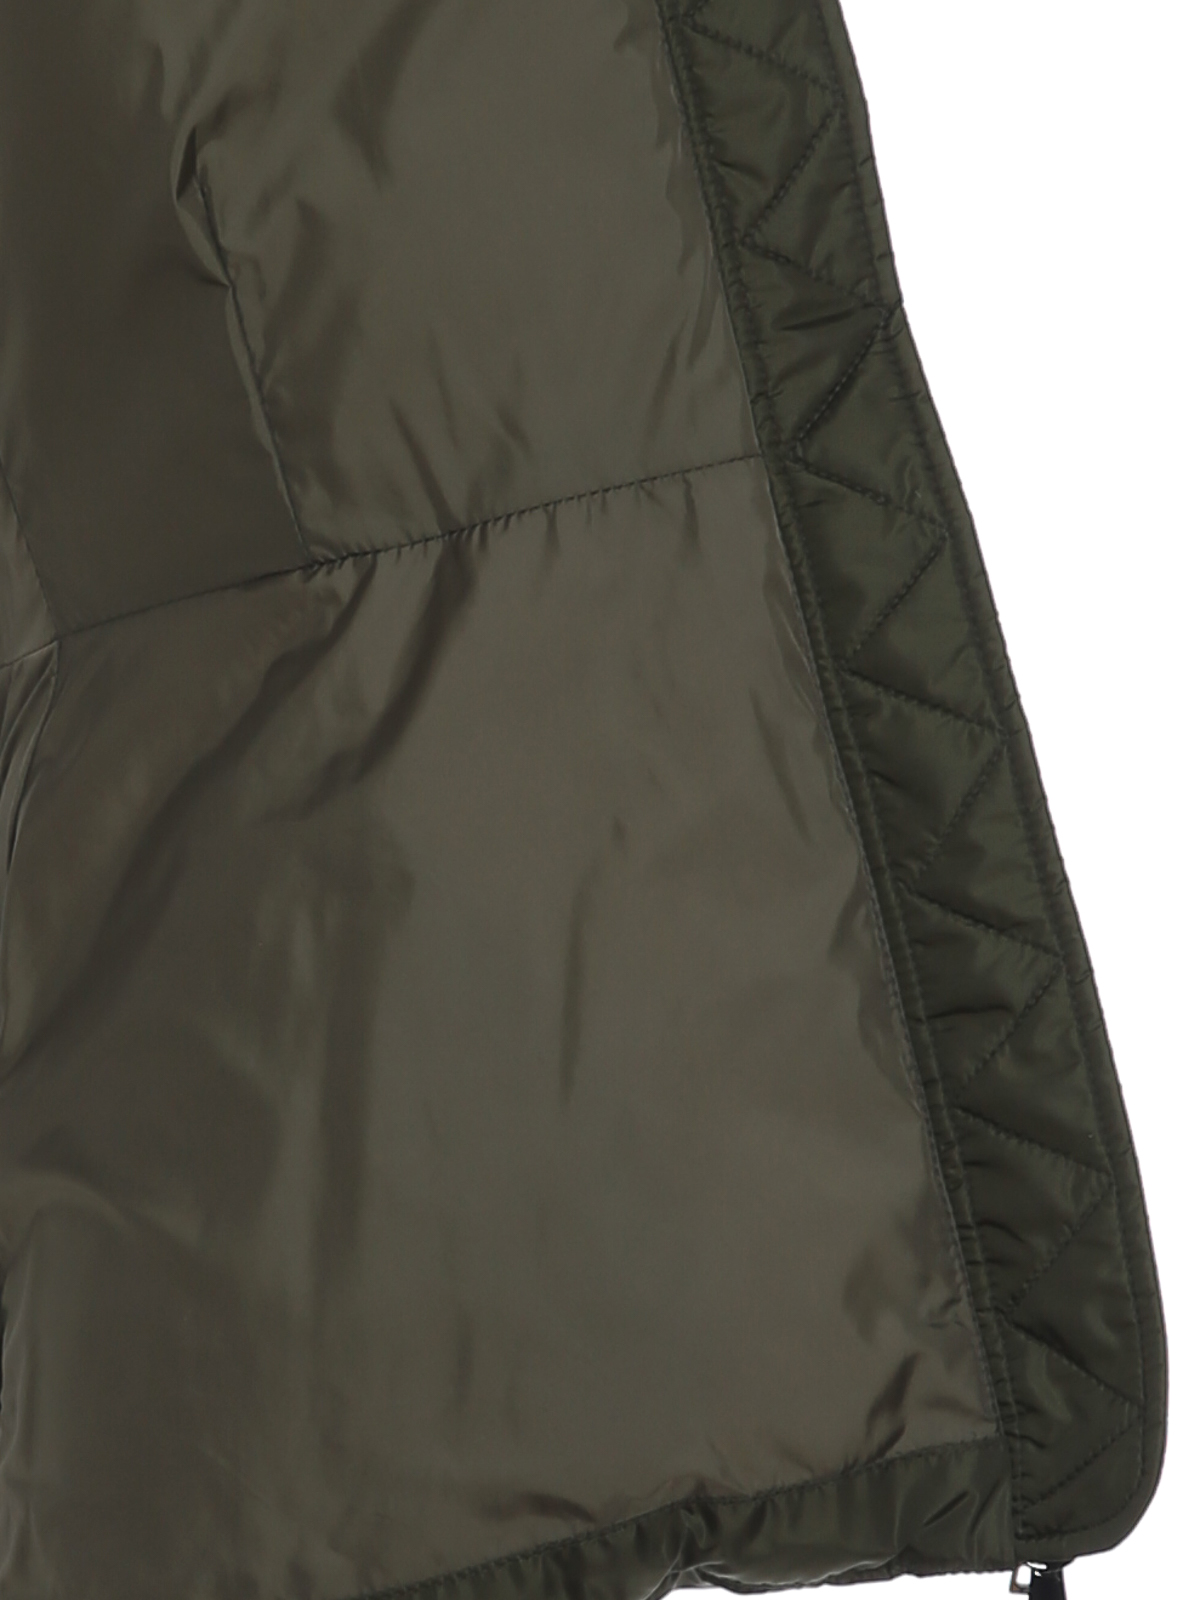 SEMICOUTURE Betheney women's two-tone military/black down jacket